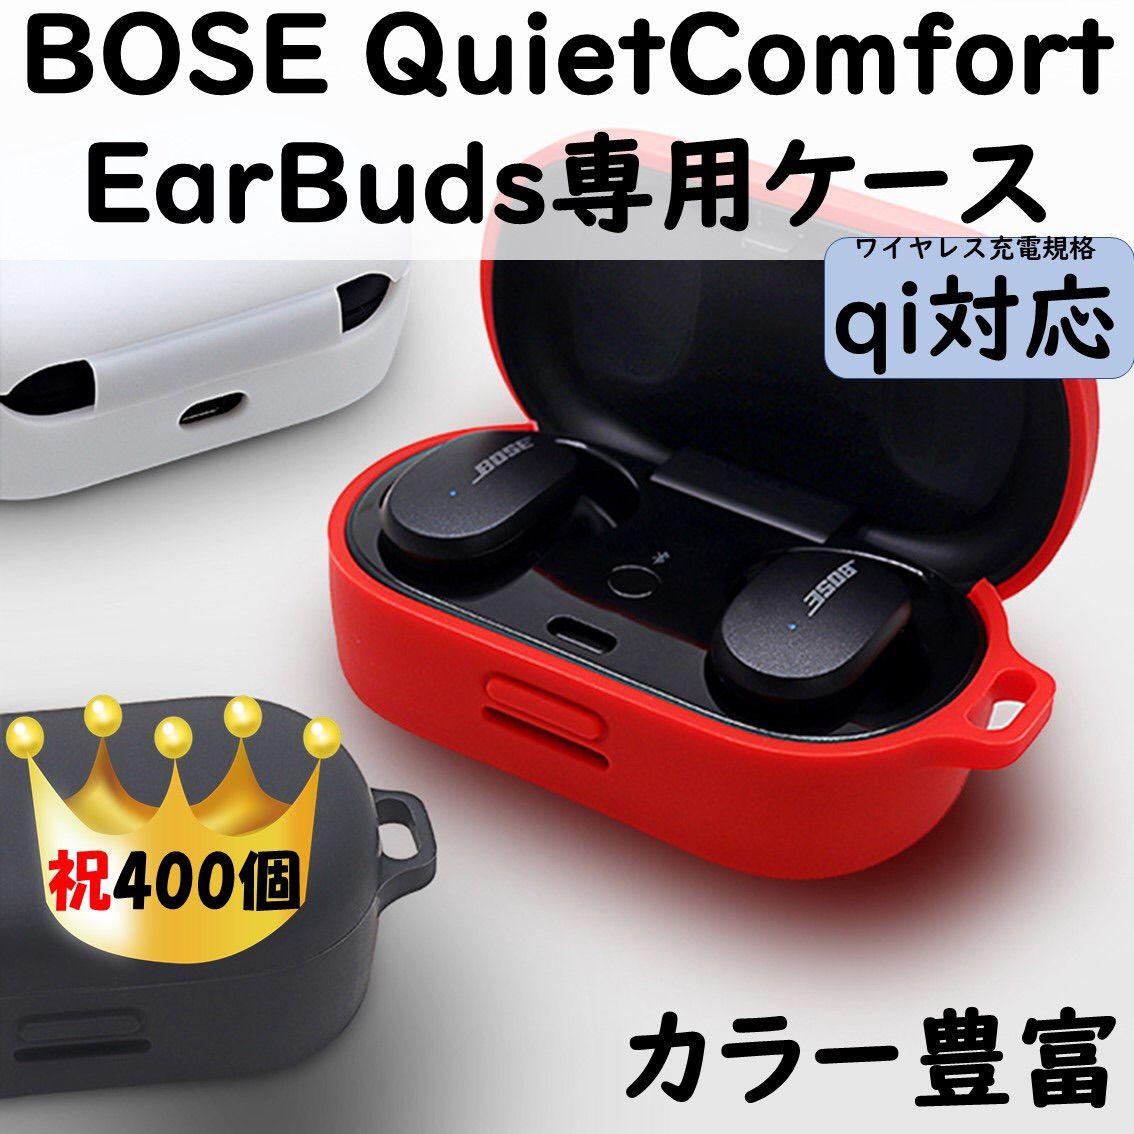 Bose QuietComfort Earbuds ケースなし